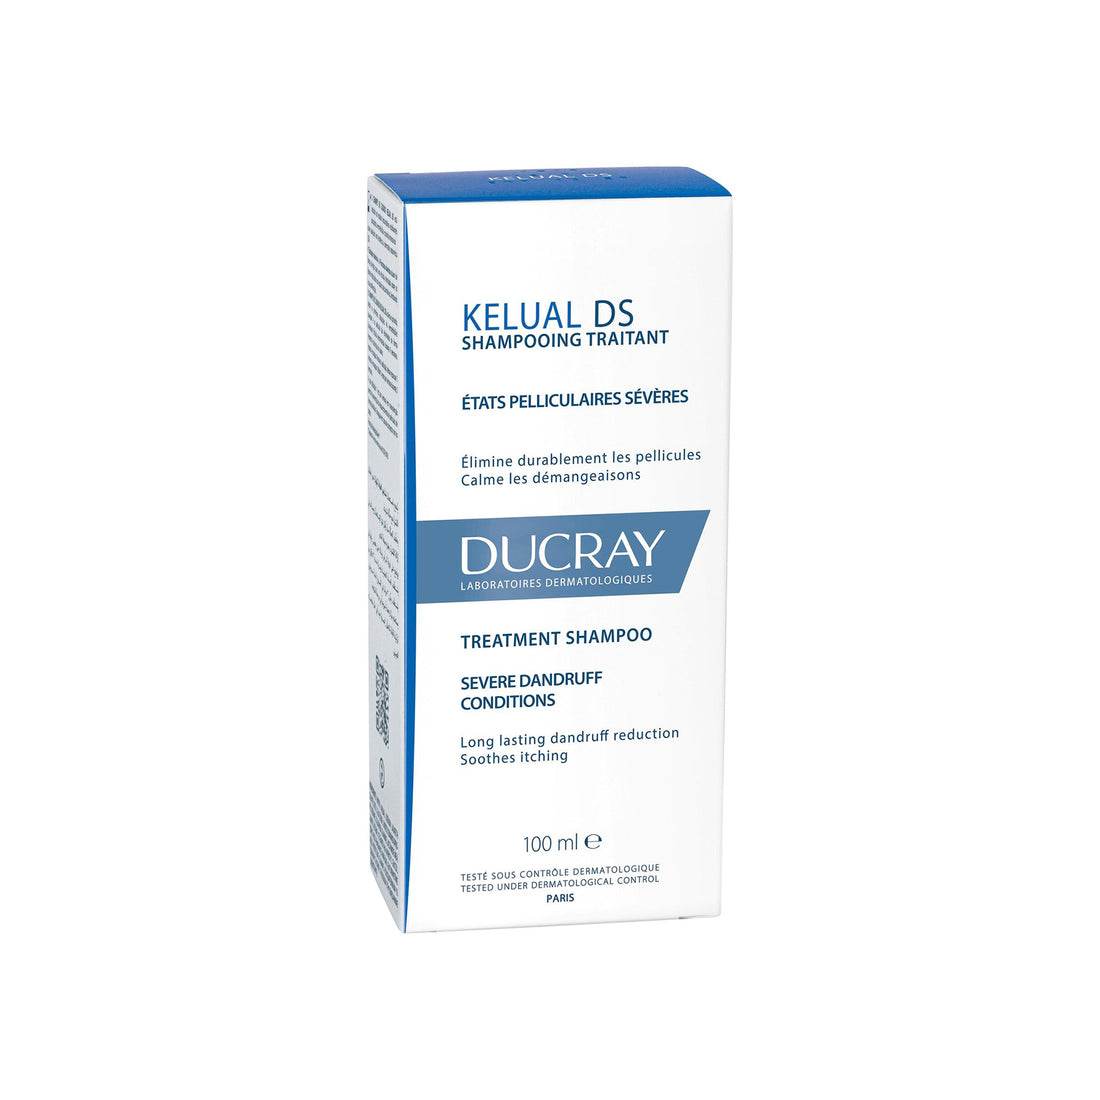 Ducray Kelual DS Anti-Dandruff Treatment Shampoo 100ml (3.38fl oz)